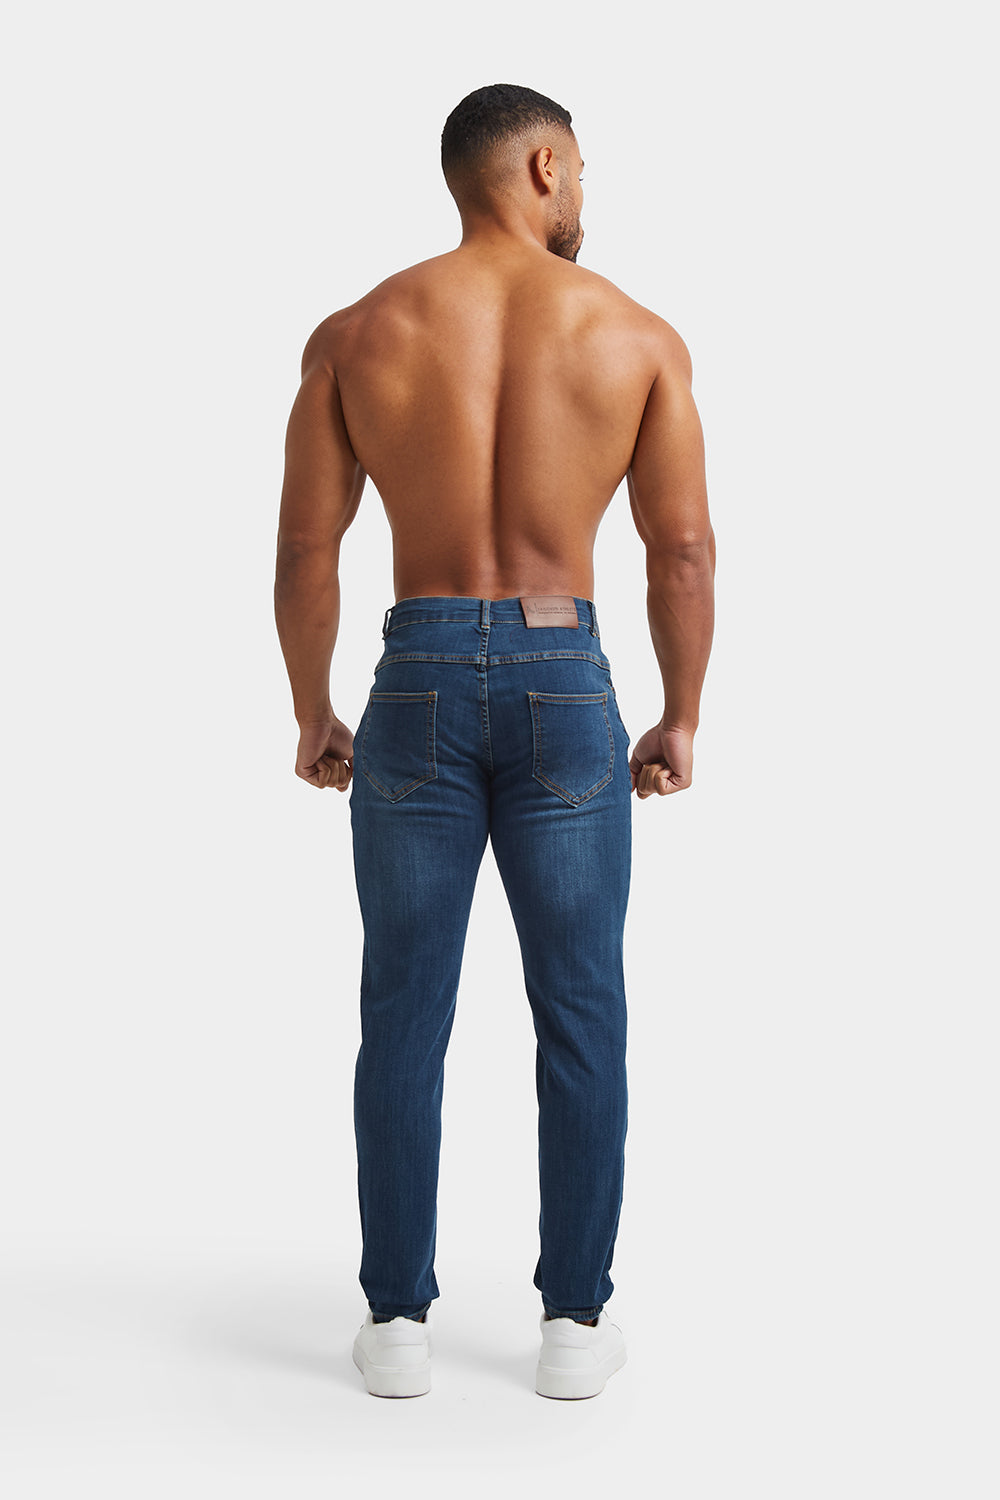 Buy Dark Blue Ankle Length Stretchable Men's Jeans Online